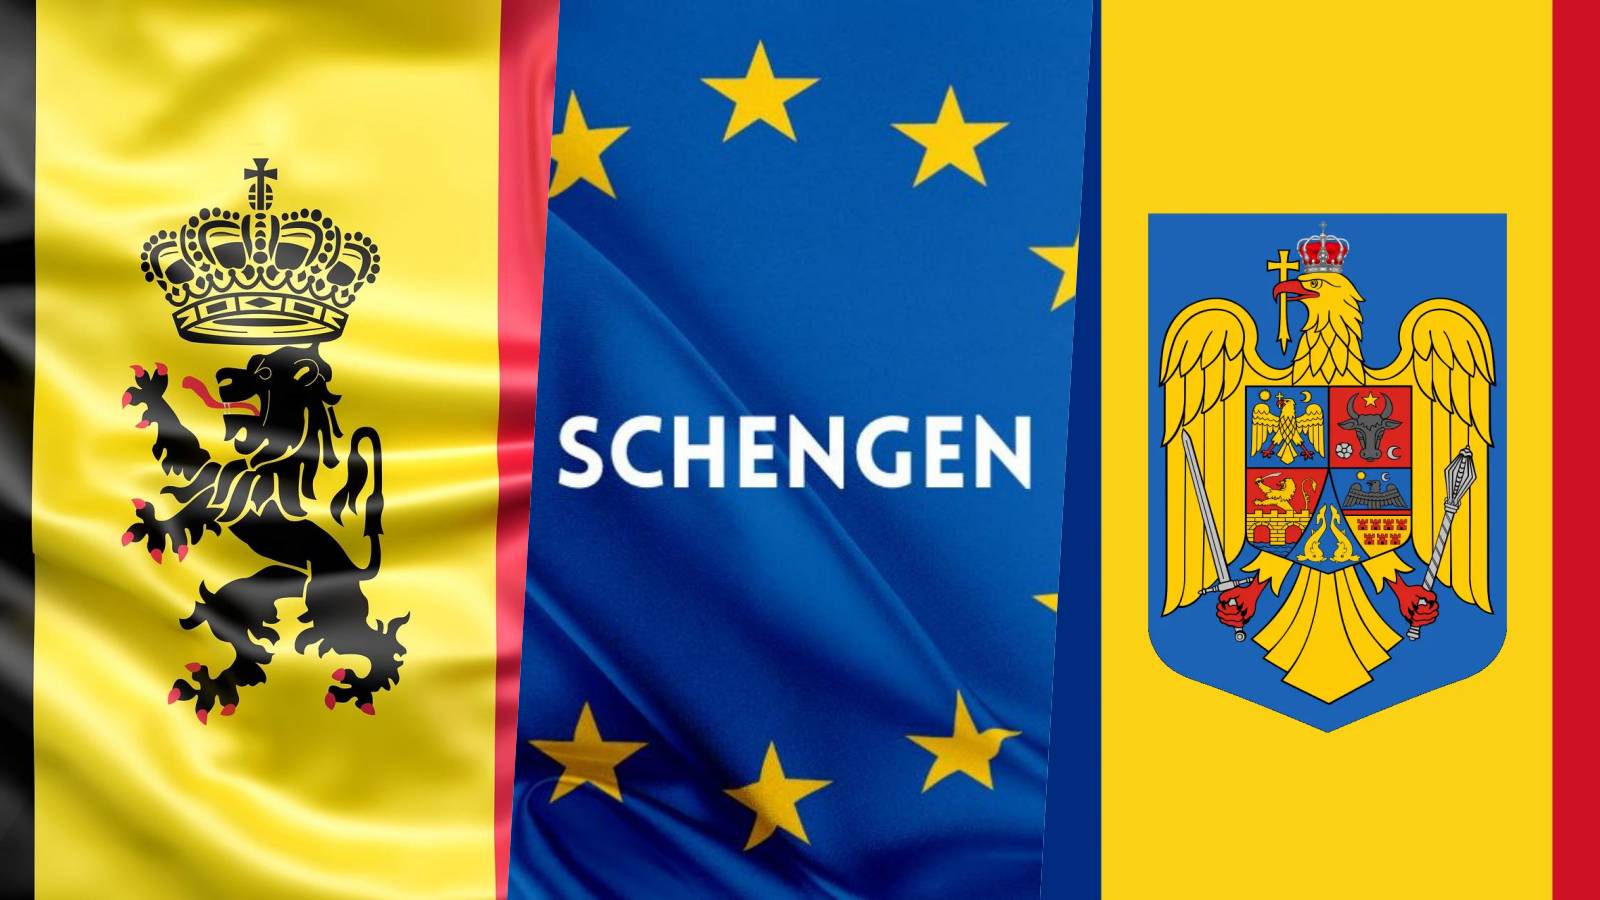 Belgia Anunt Oficial ULTIM MOMENT PE Presiune Finalizarea Aderarii Romaniei Schengen